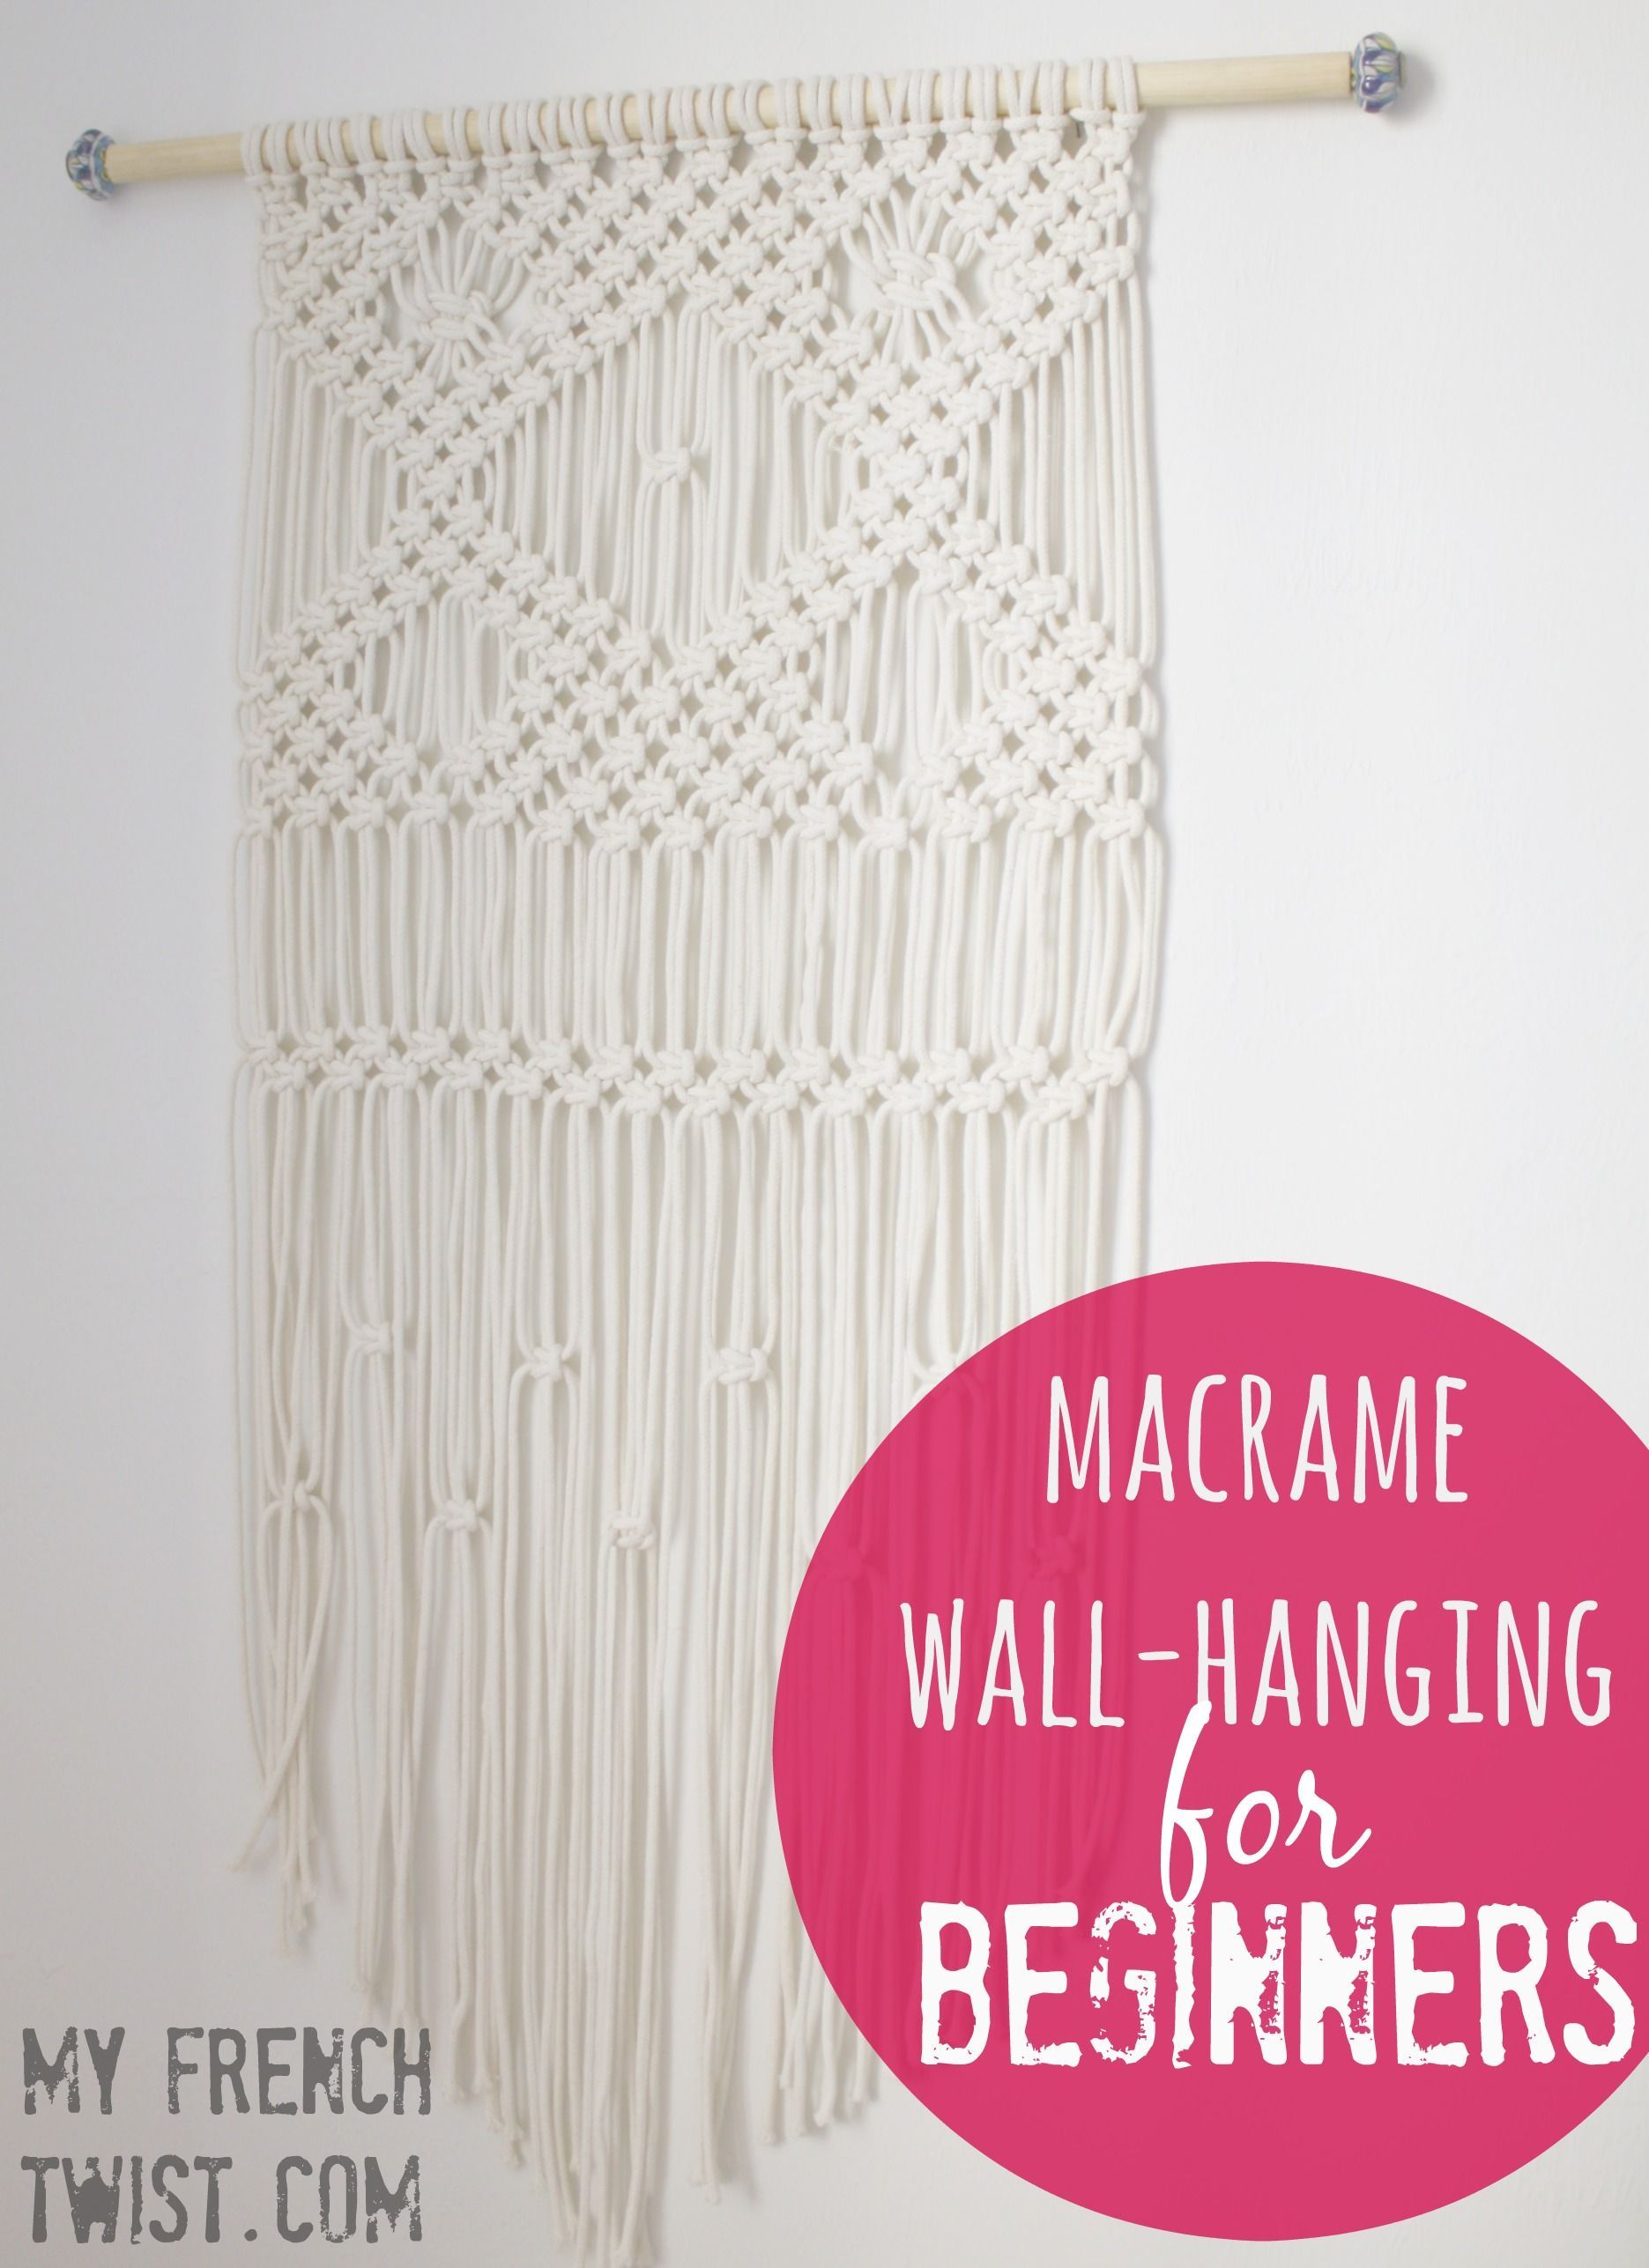 A macramé wall-hanging tutorial for beginners! @myfrenctwist.com. #macrameWallhanging